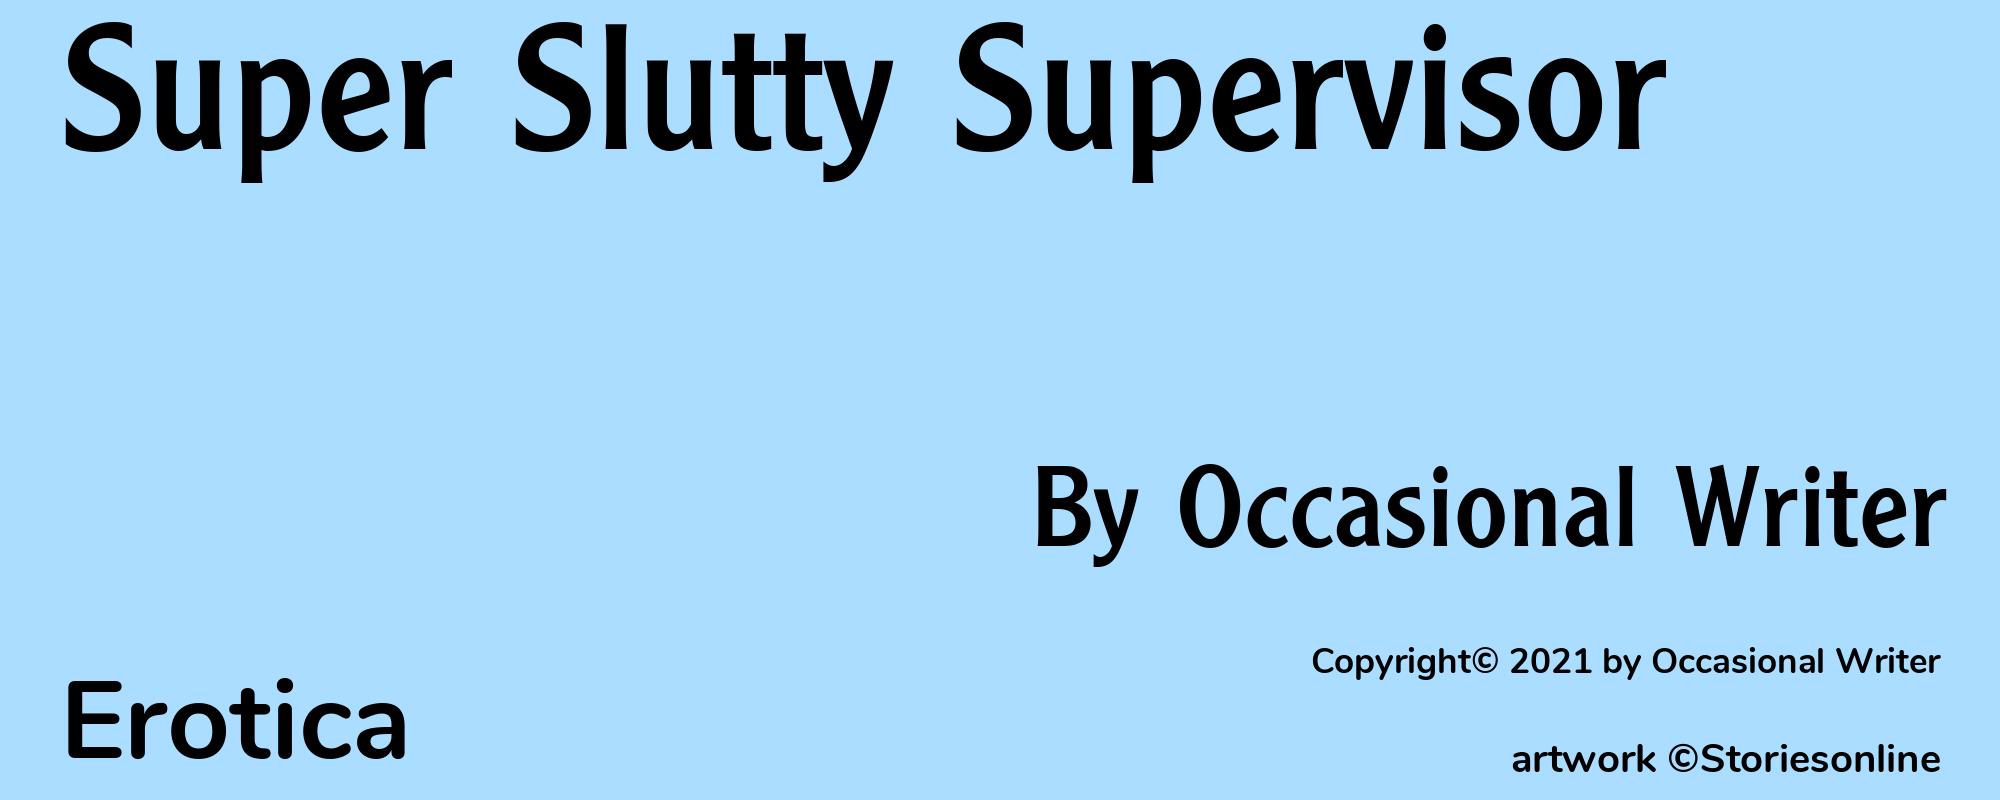 Super Slutty Supervisor - Cover